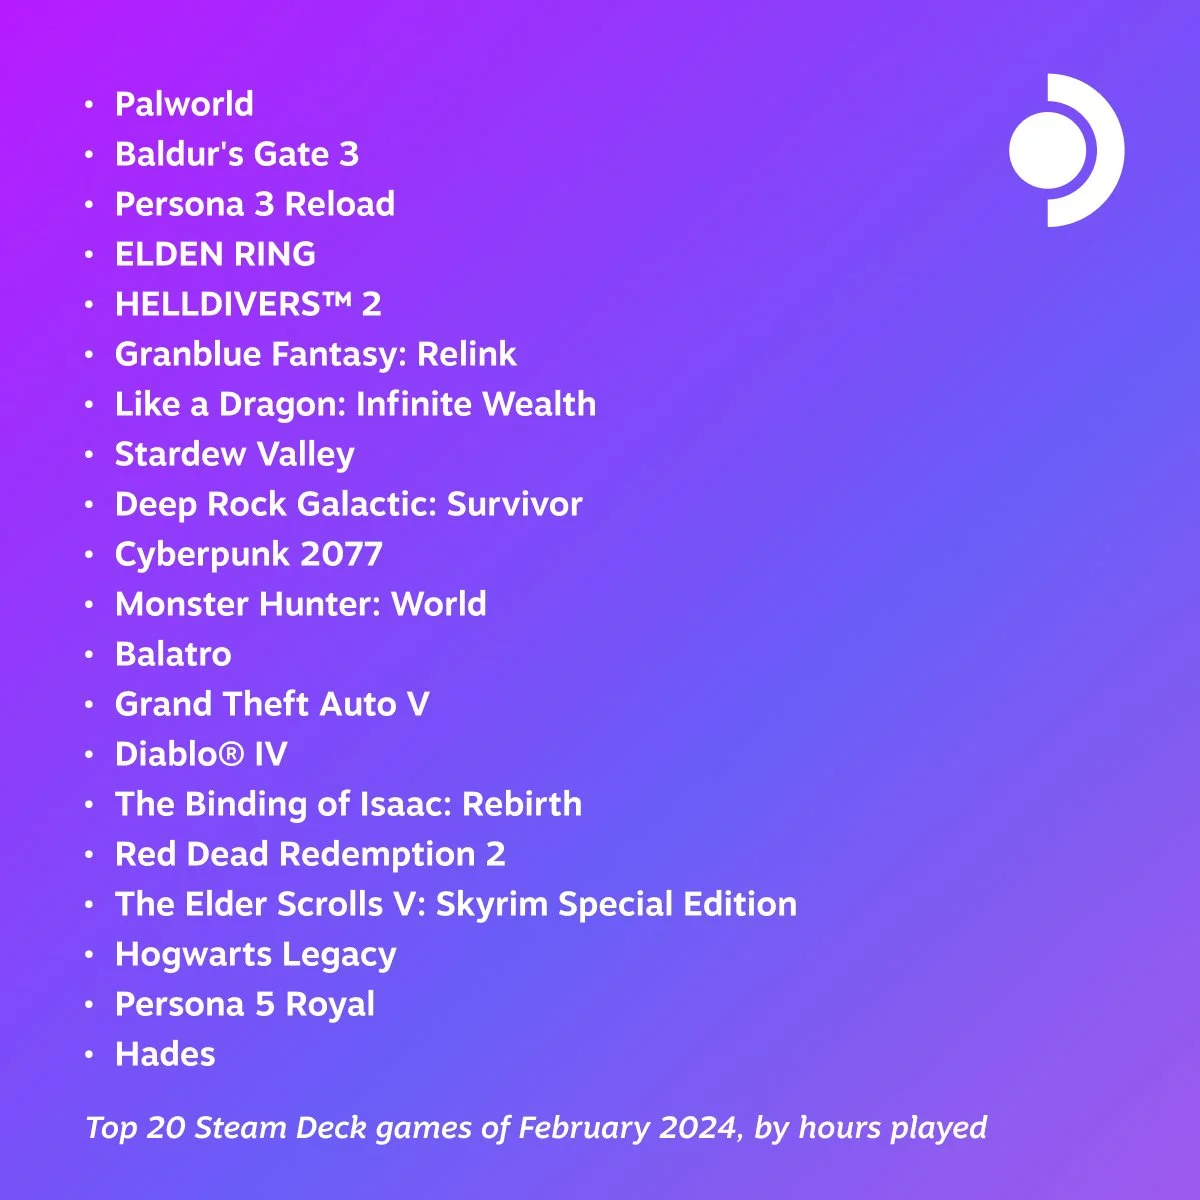 Palworld царствовала на Steam Deck в феврале 2024 года - фото 1